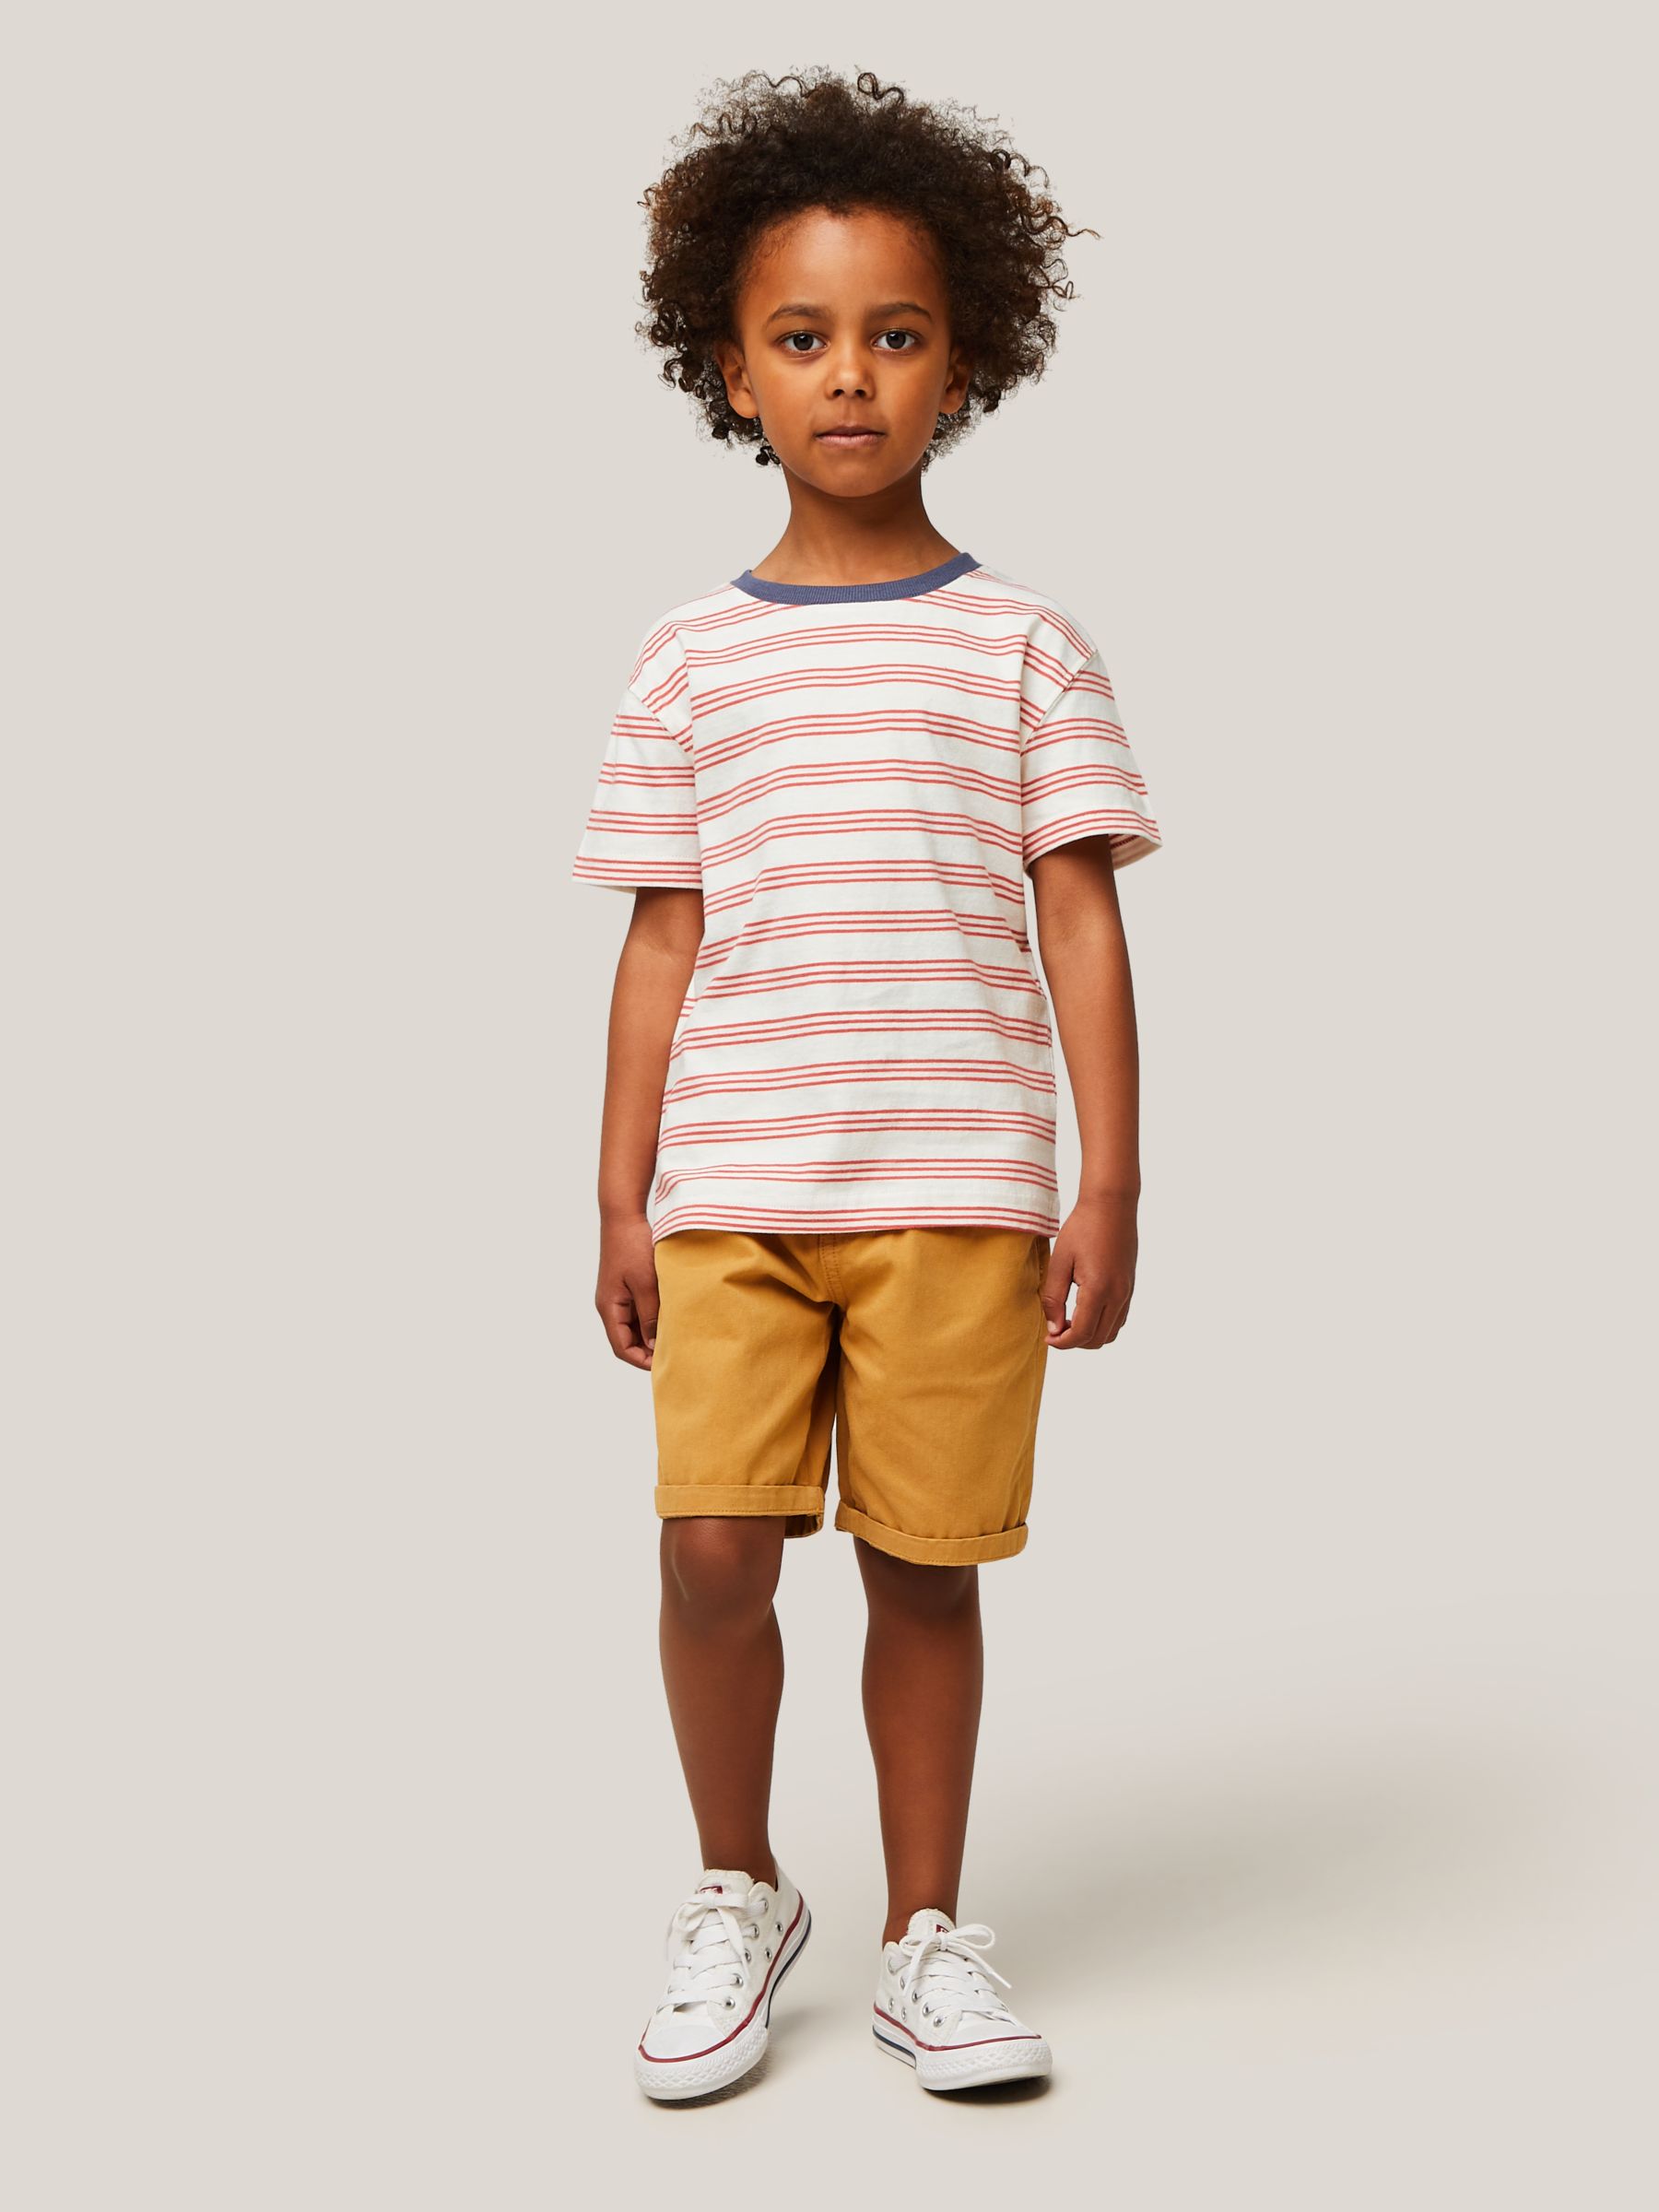 John Lewis & Partners Kids' Bike Short Sleeve T-Shirts, Pack of 3, Multi